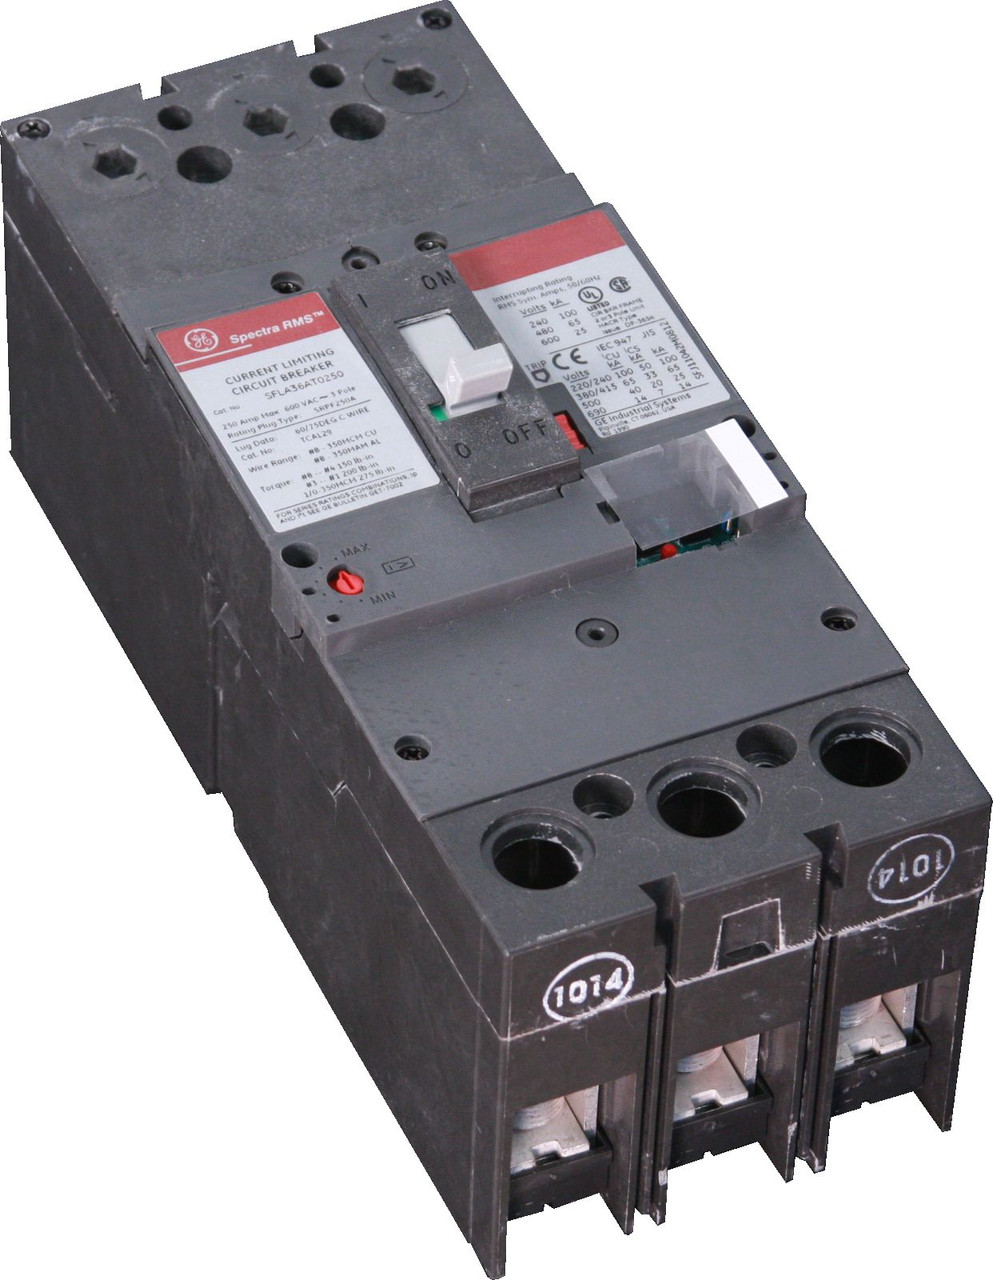 SFLA36AI0250 Spectra Series
Motor Circuit Protector